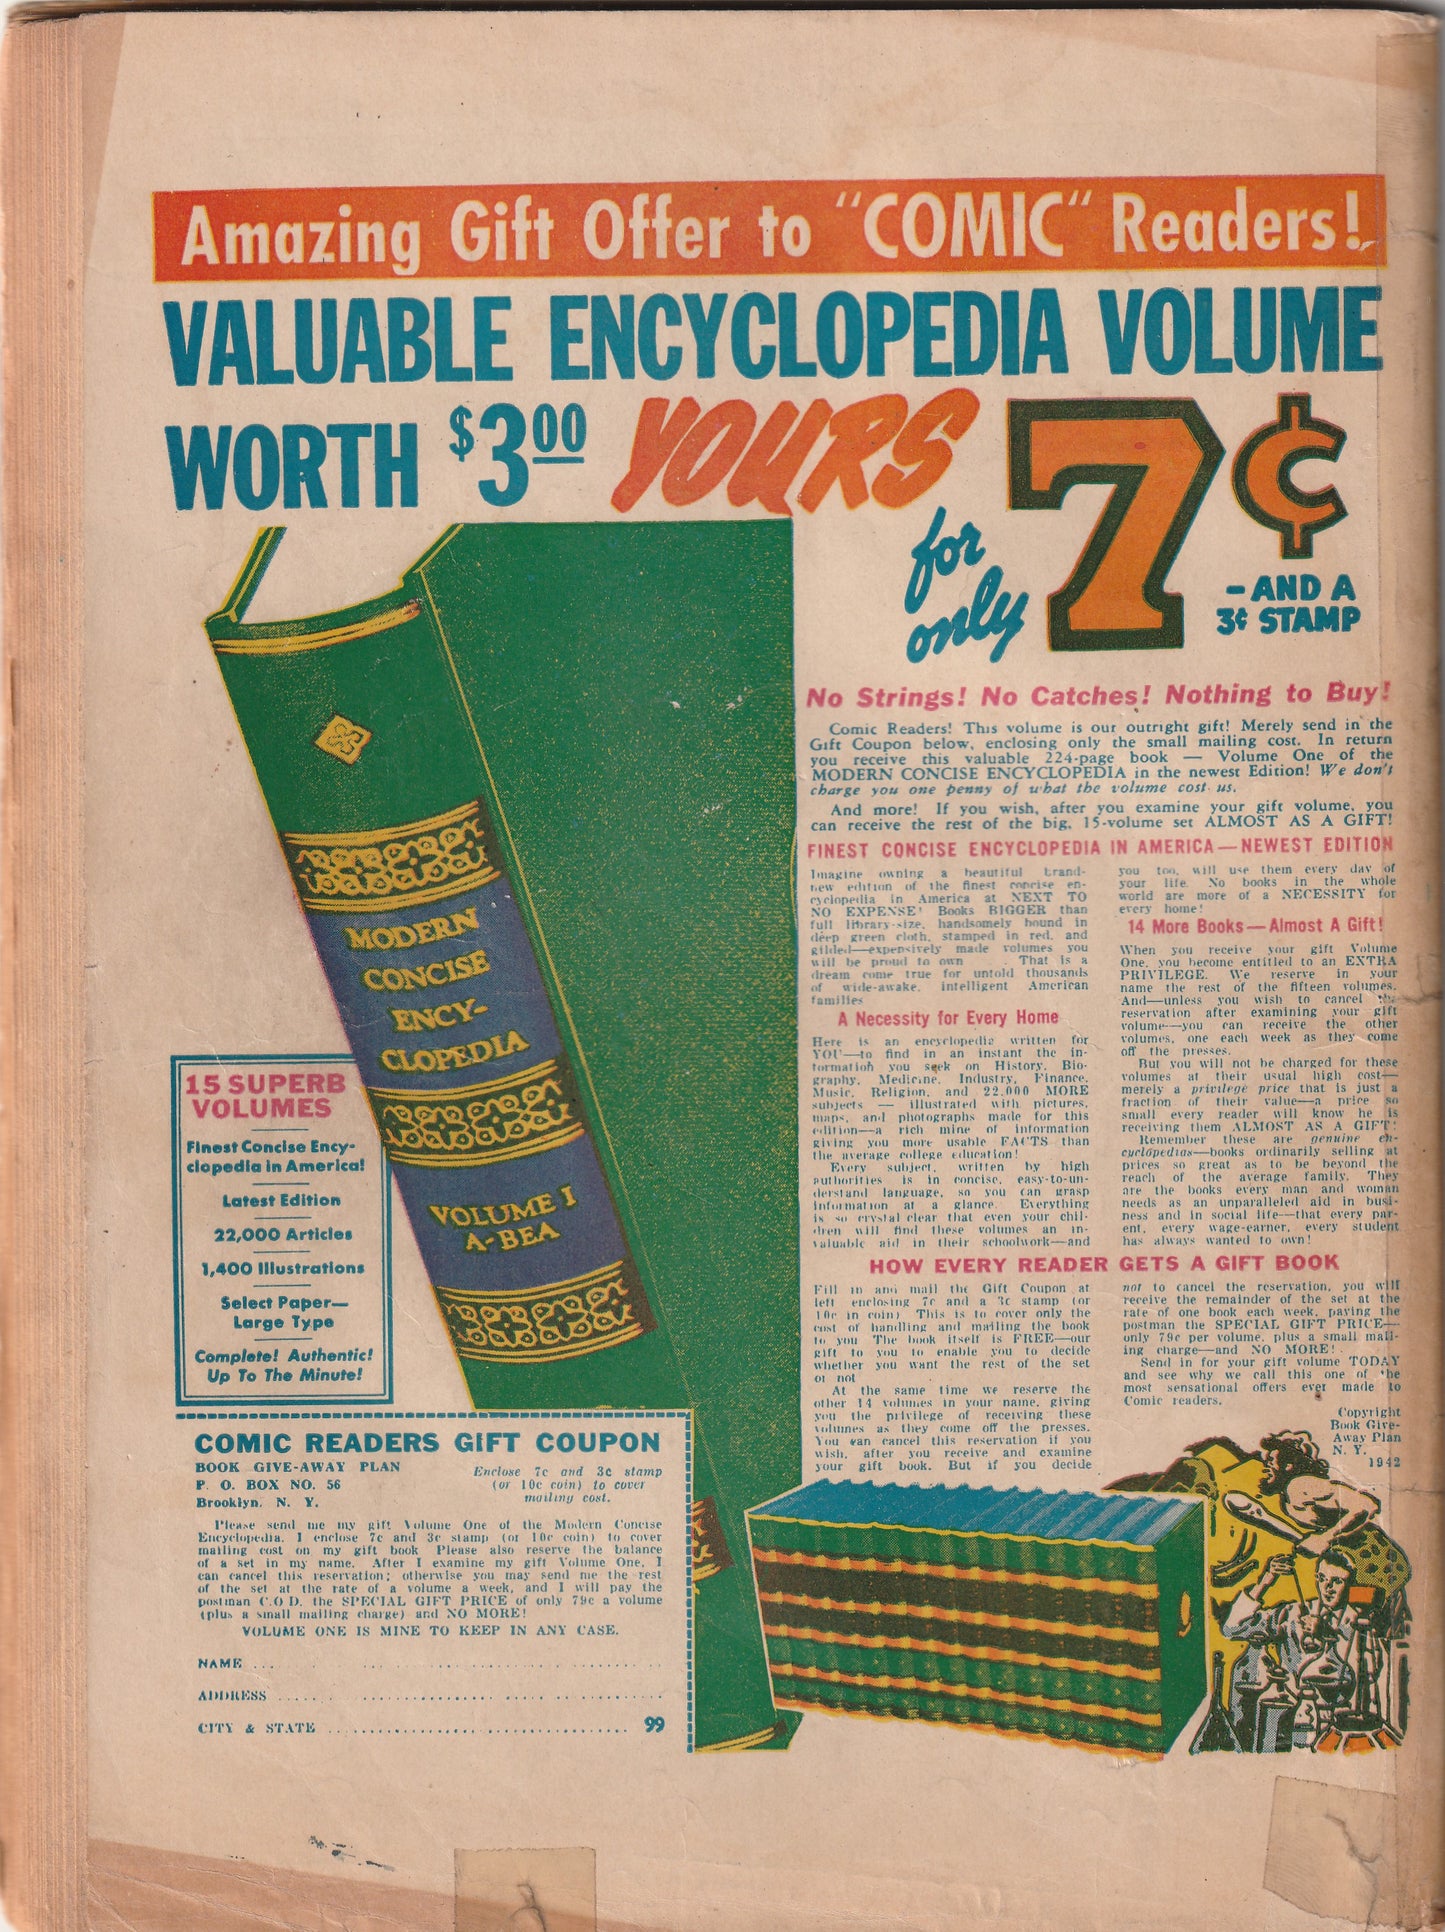 Green Hornet Vol 1 #9 (1942) - Jack Kirby cover